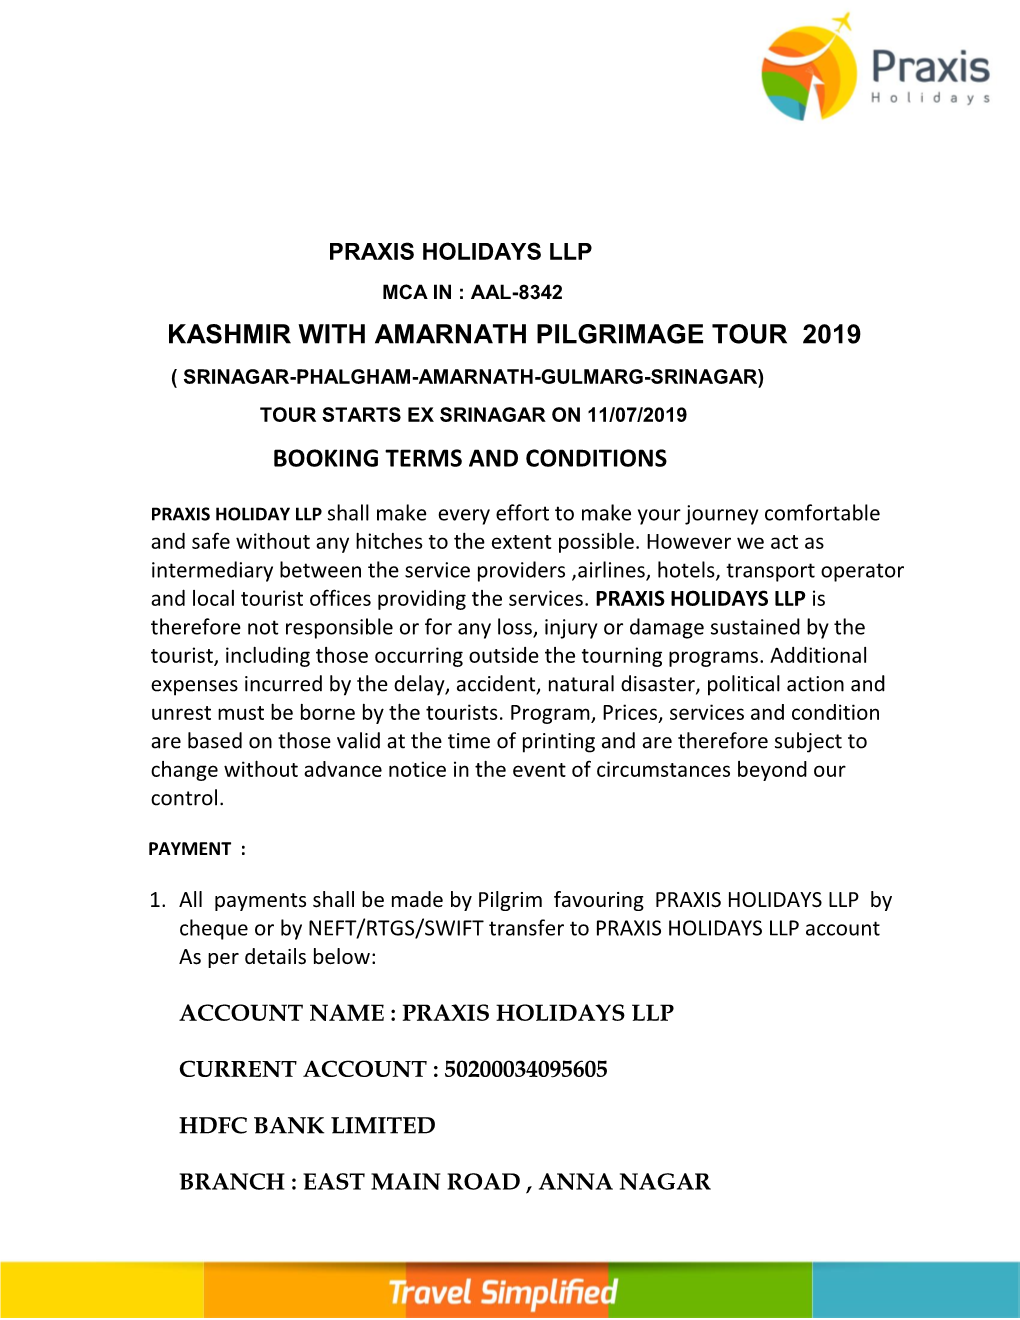 Kashmir with Amarnath Pilgrimage Tour 2019 ( Srinagar-Phalgham-Amarnath-Gulmarg-Srinagar) Tour Starts Ex Srinagar on 11/07/2019